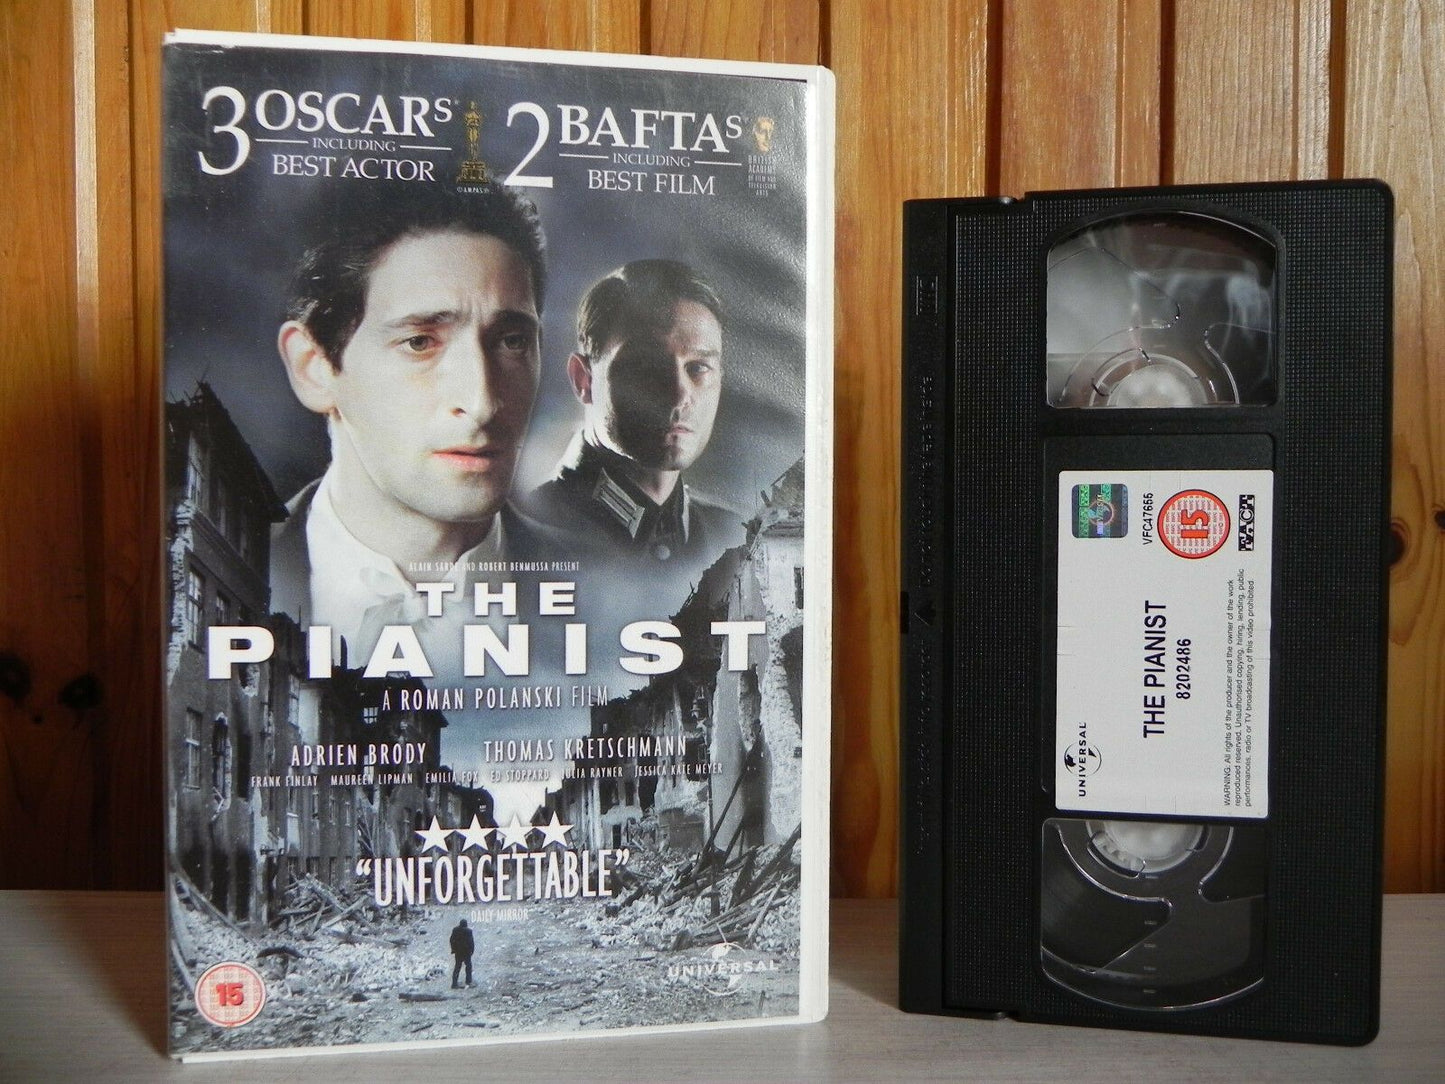 The Pianist: Based On True Story - 3 Oscars Winner - Adrien Brody - Drama - VHS-